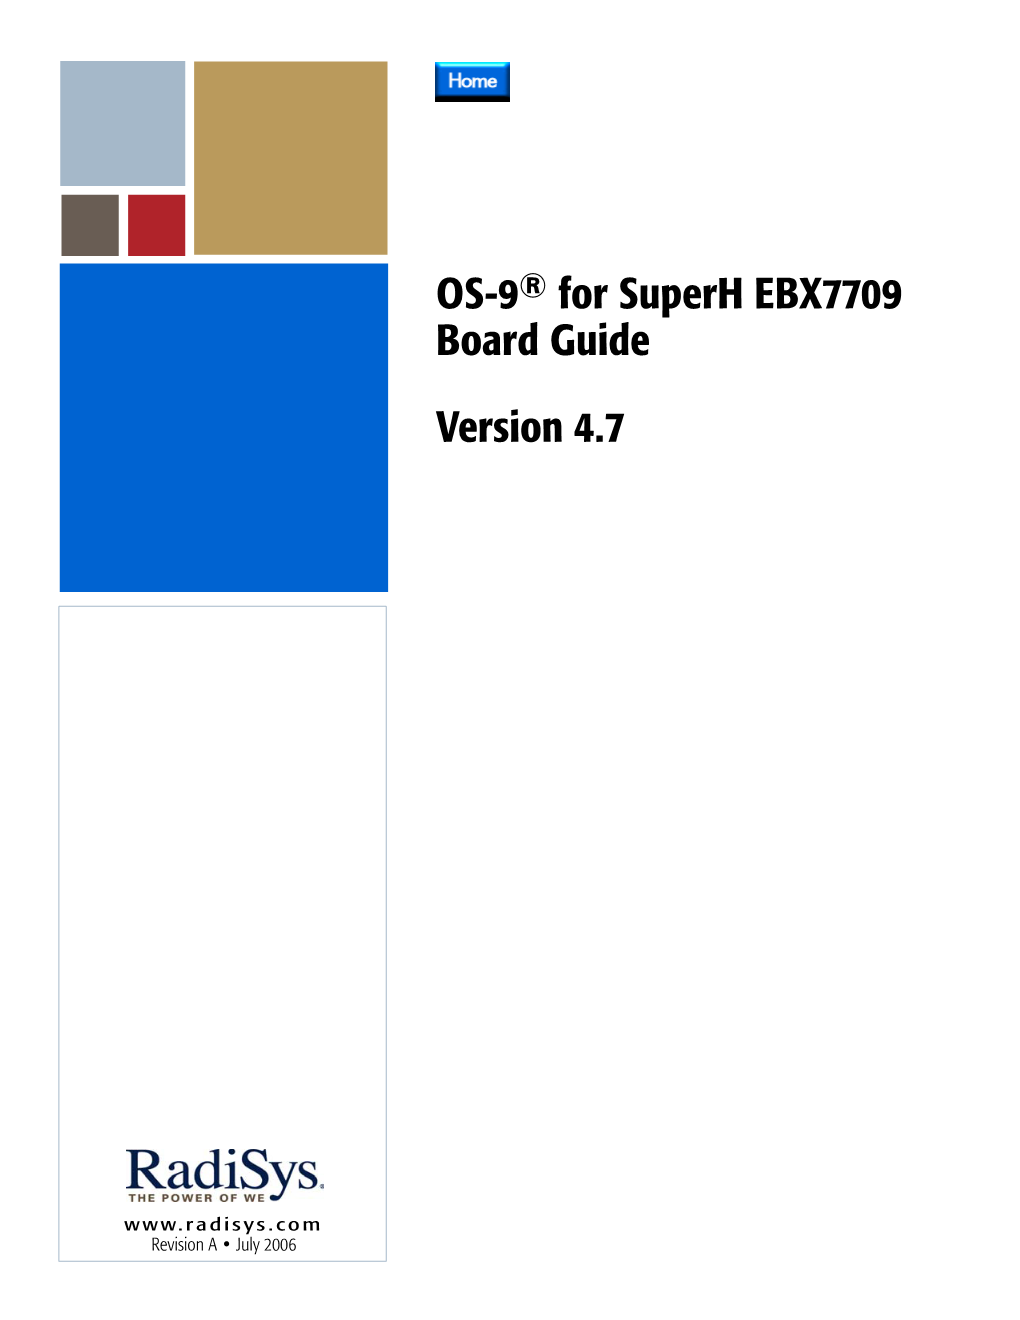 OS-9 for Superh EBX7709 Board Guide